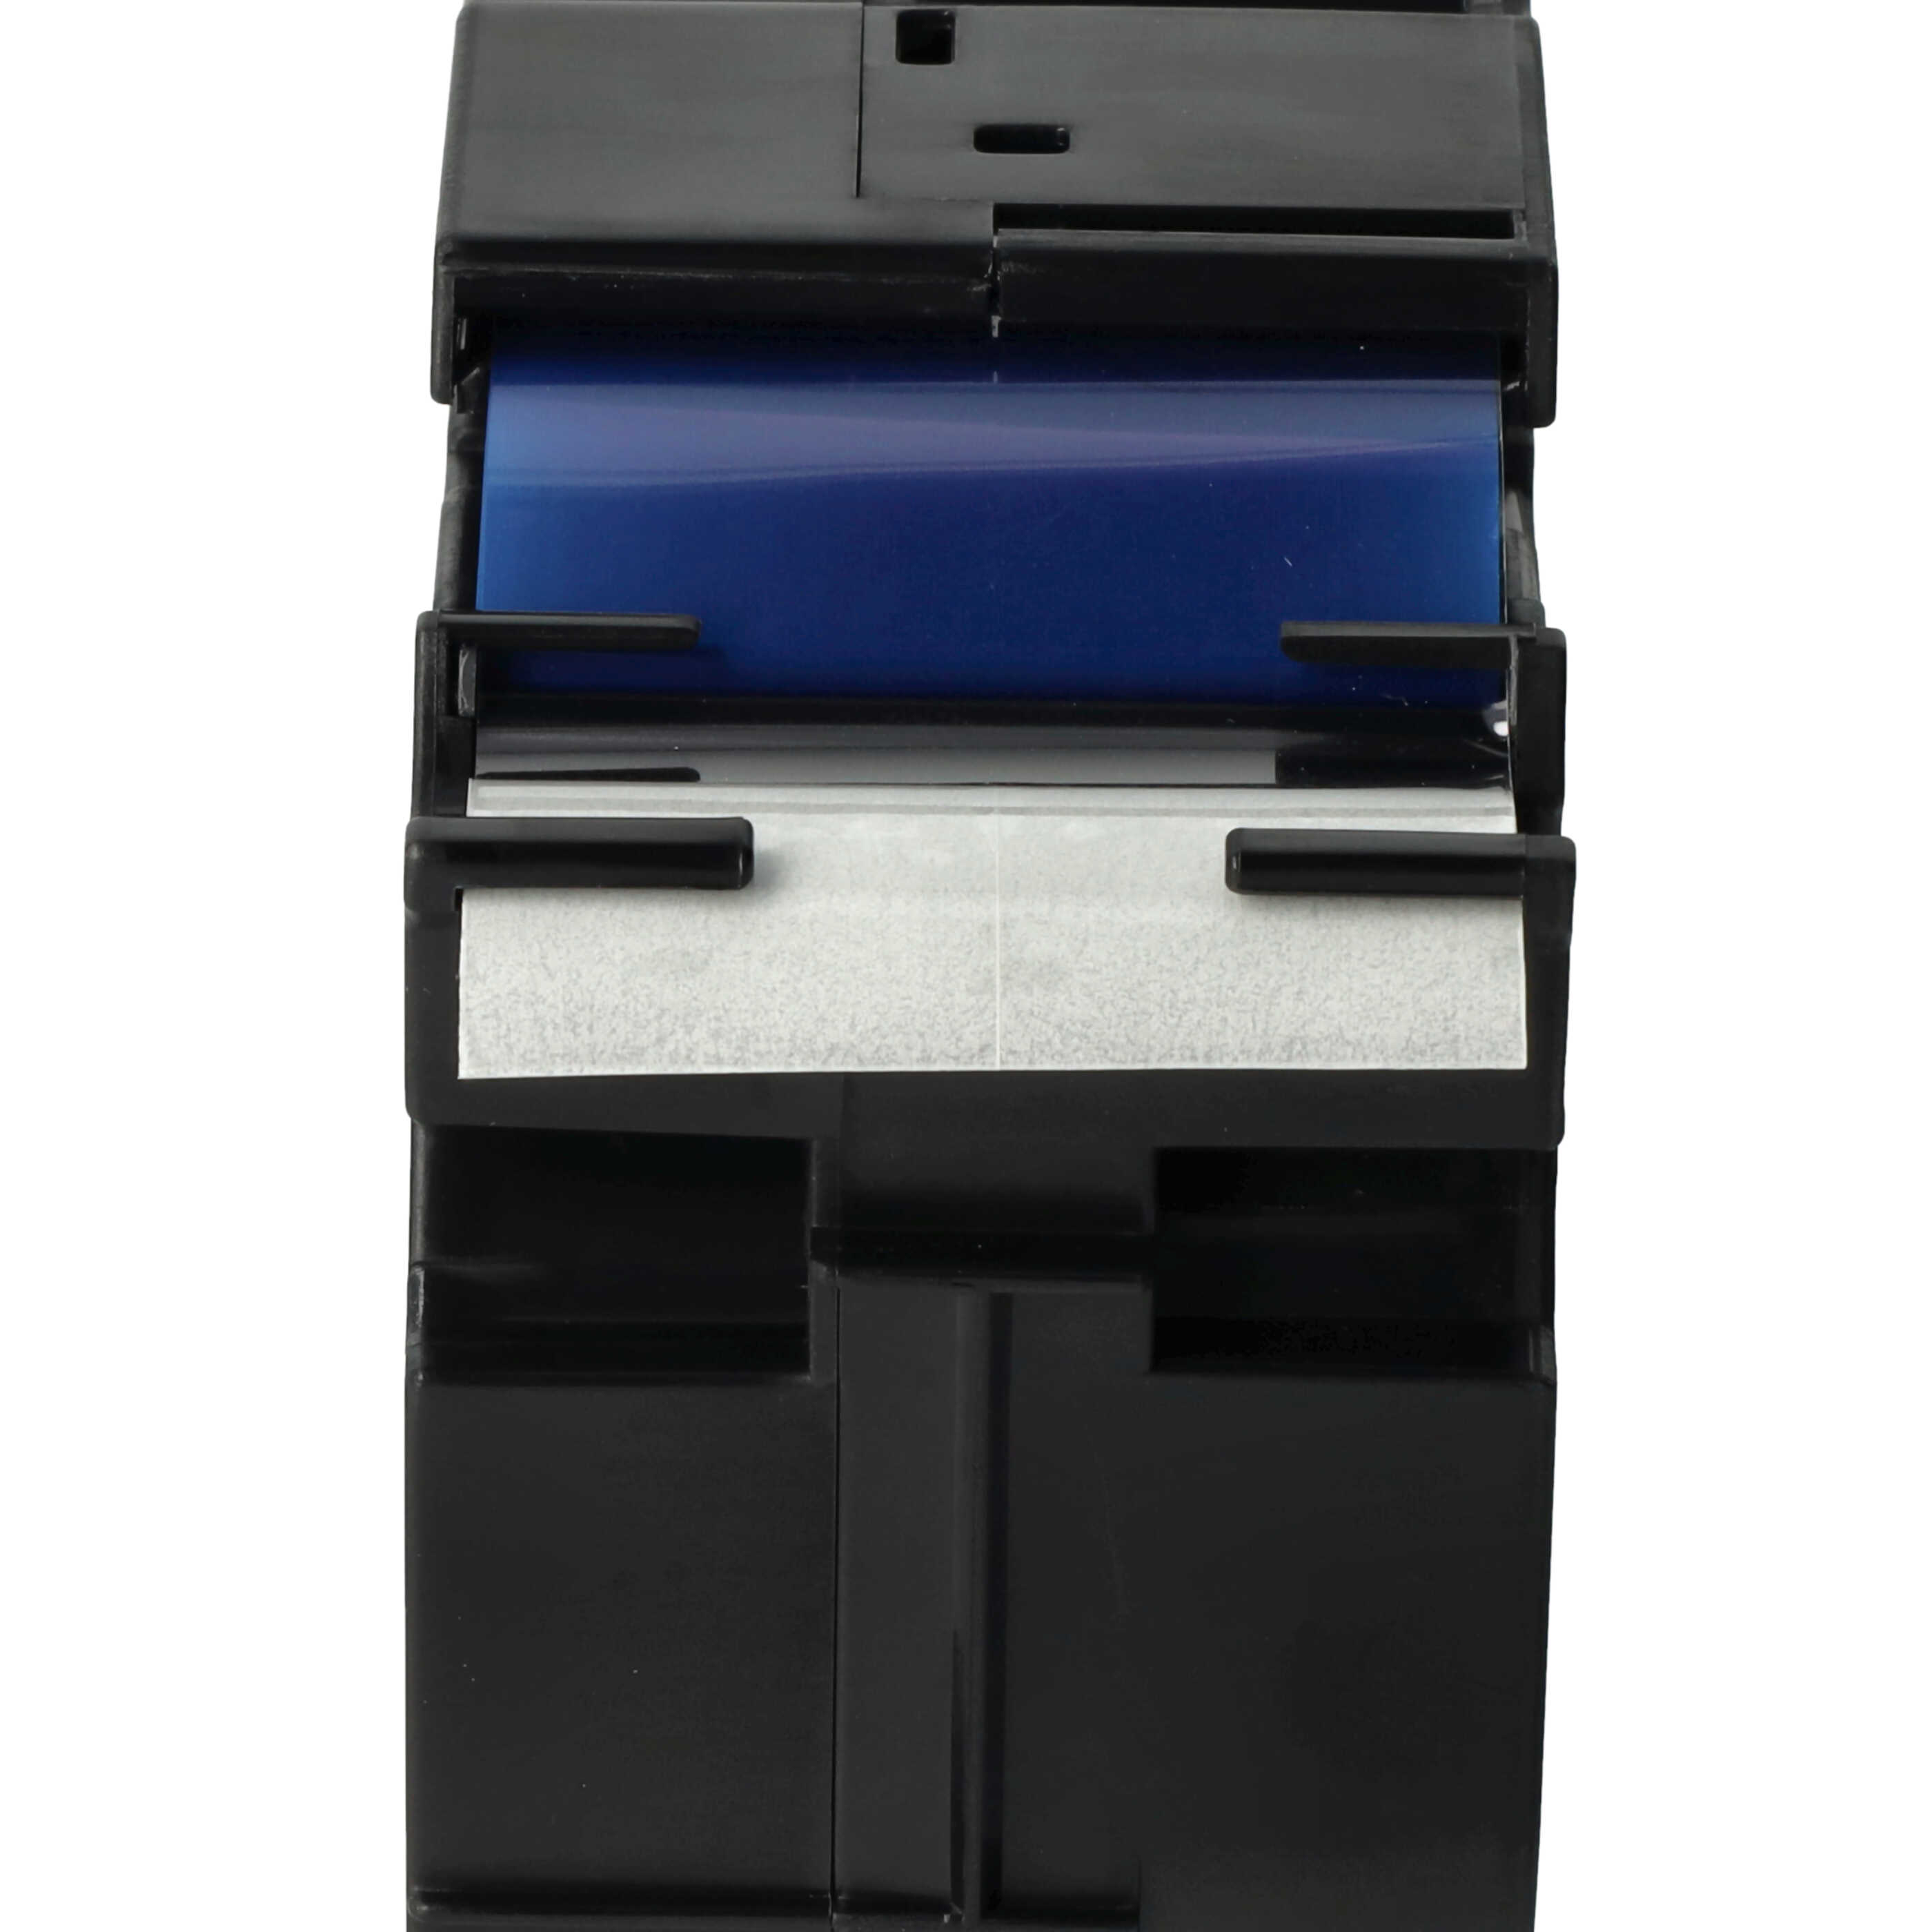 Casete cinta escritura reemplaza Brother TZE-163 Azul su Transparente